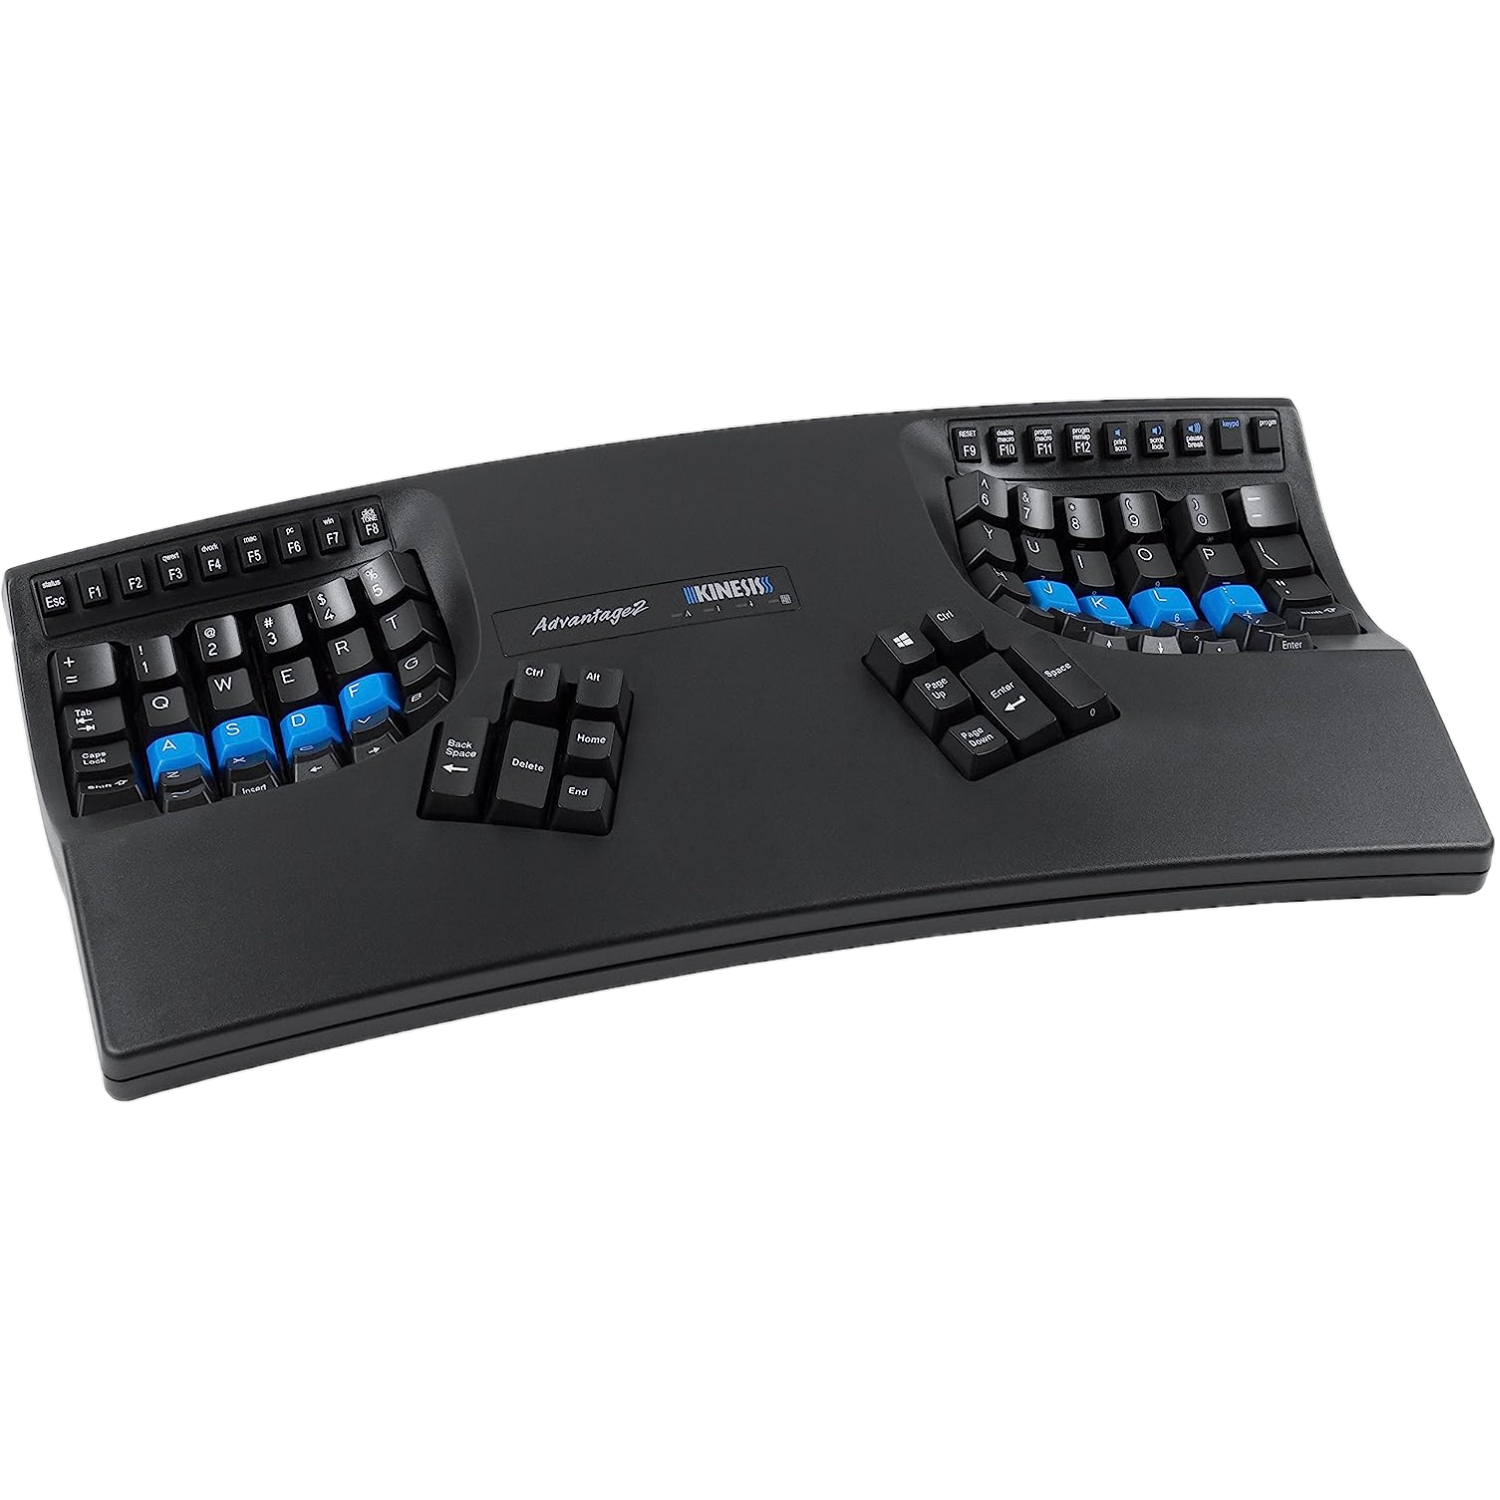 Kinesis Advantage2 ergonomic keyboard white render